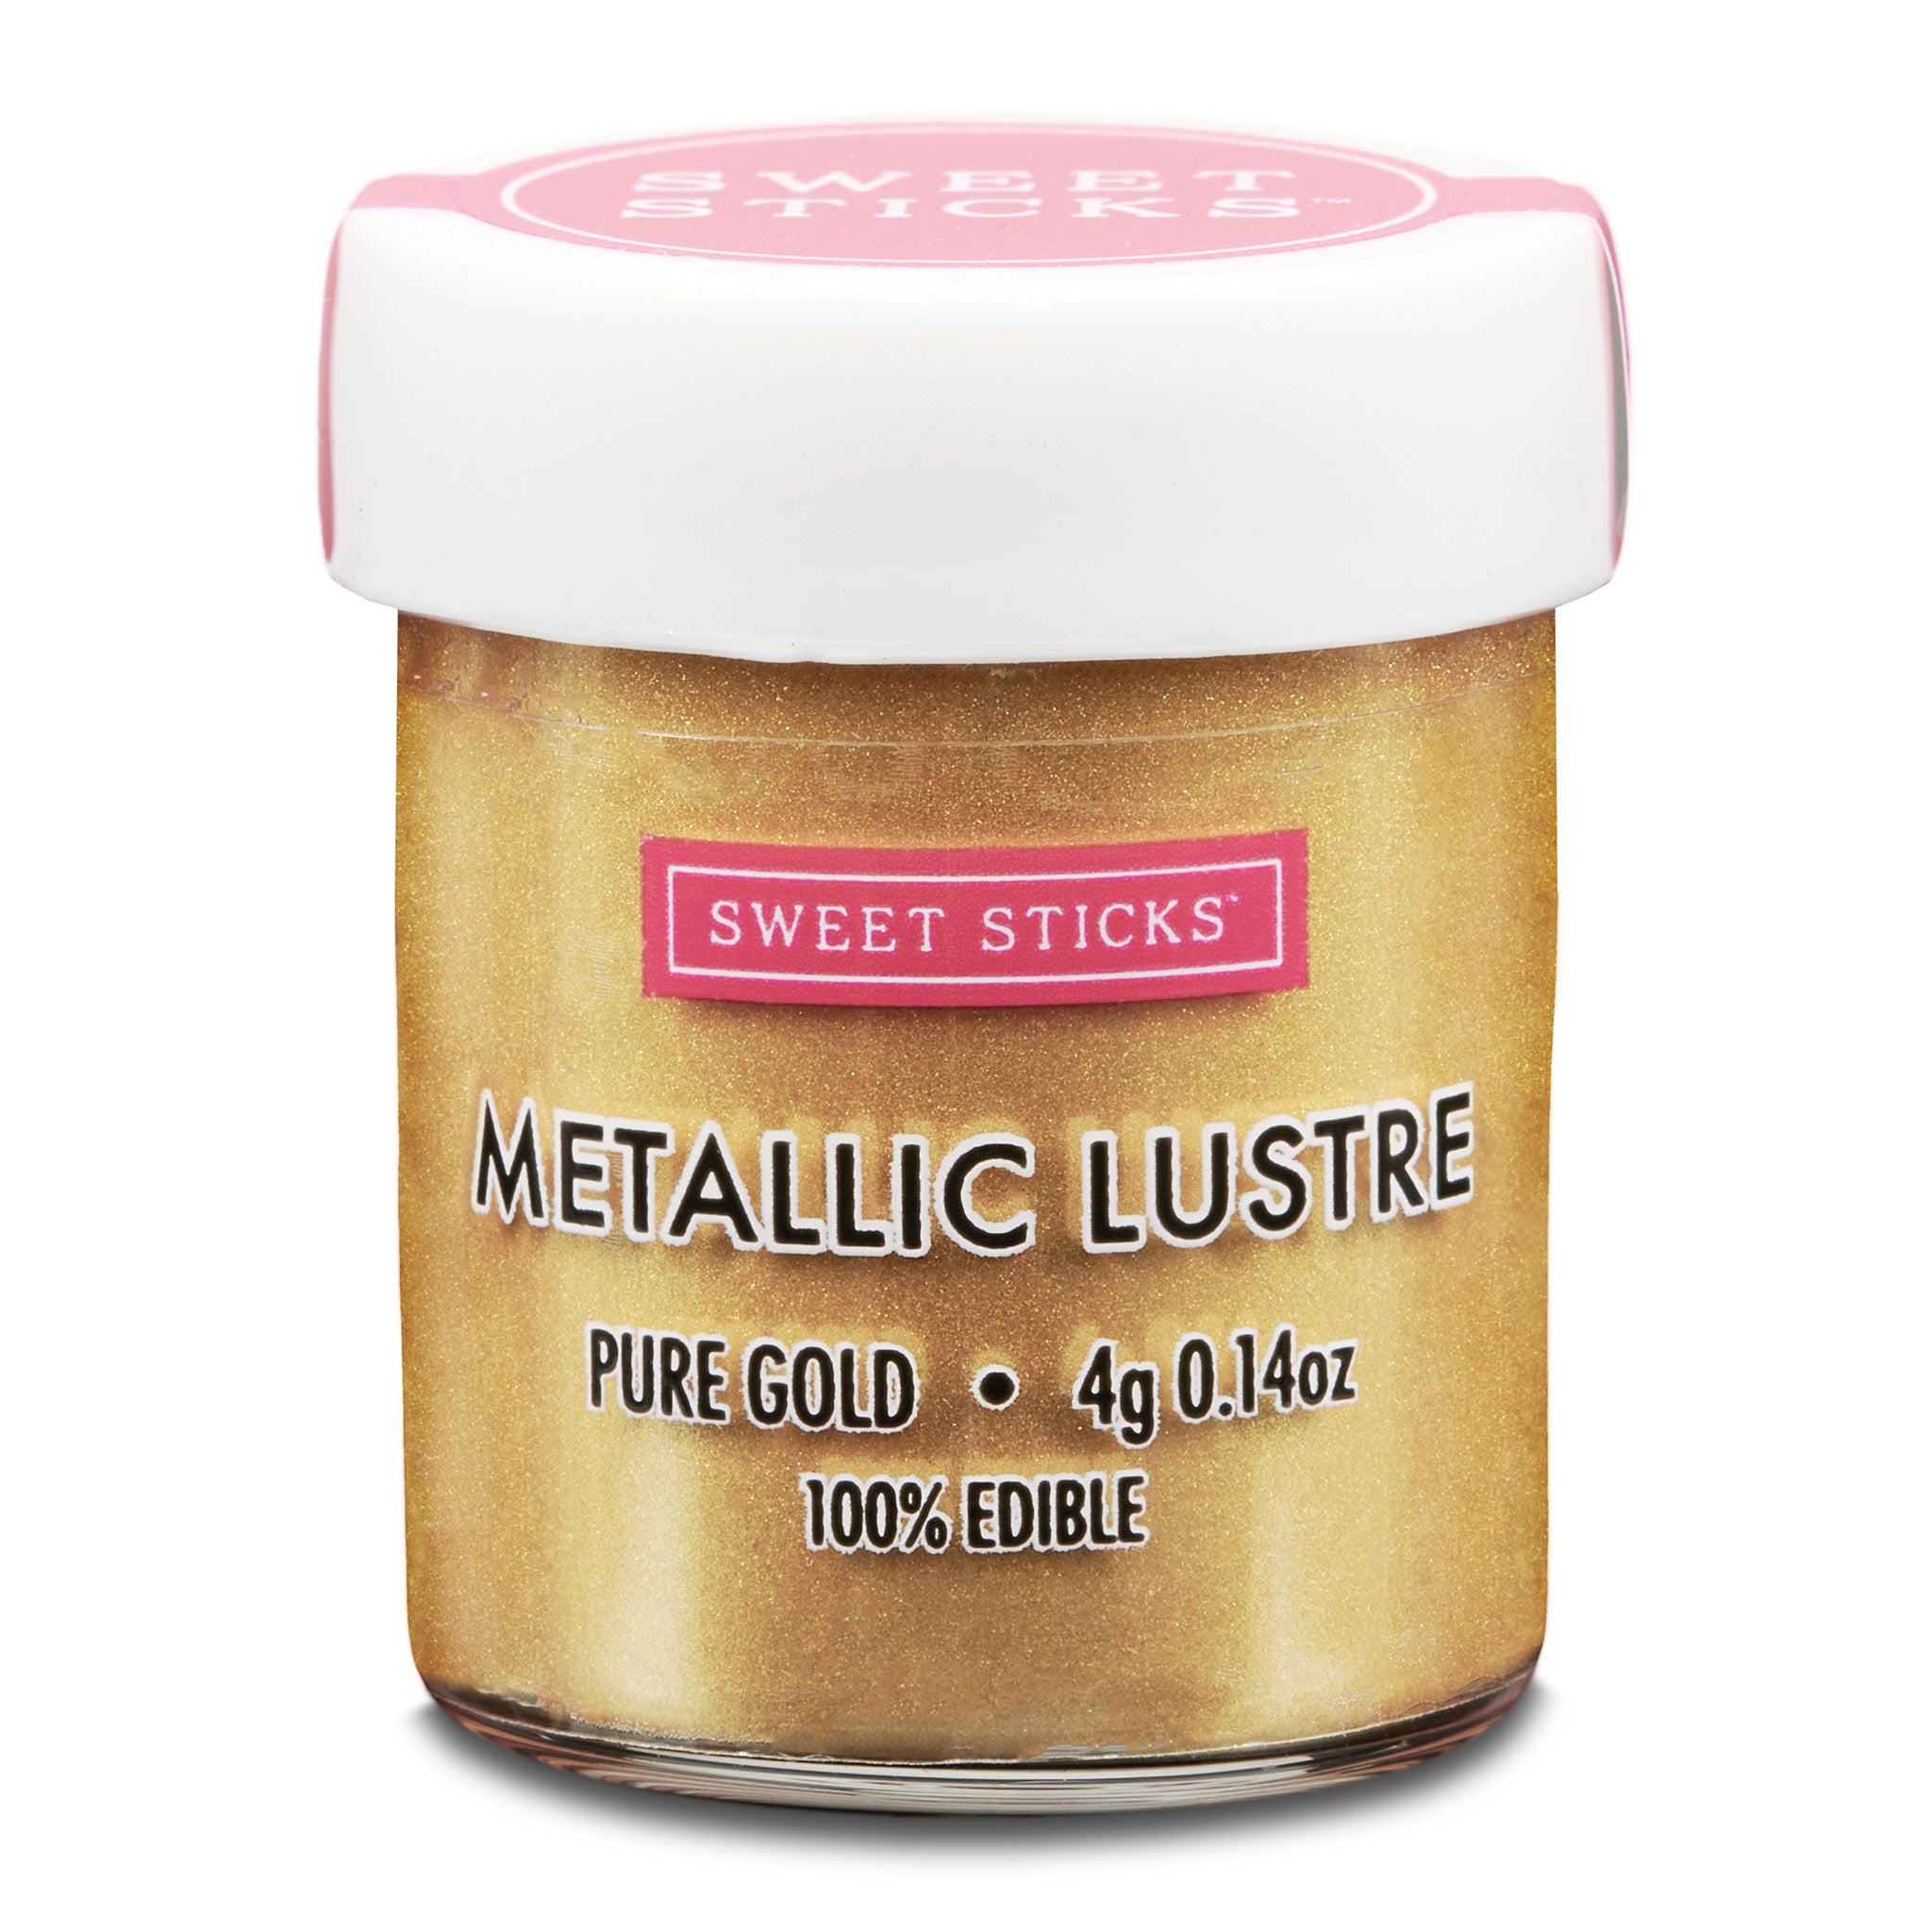 Sweet Sticks Metallic Lustre 4g - Pure Gold